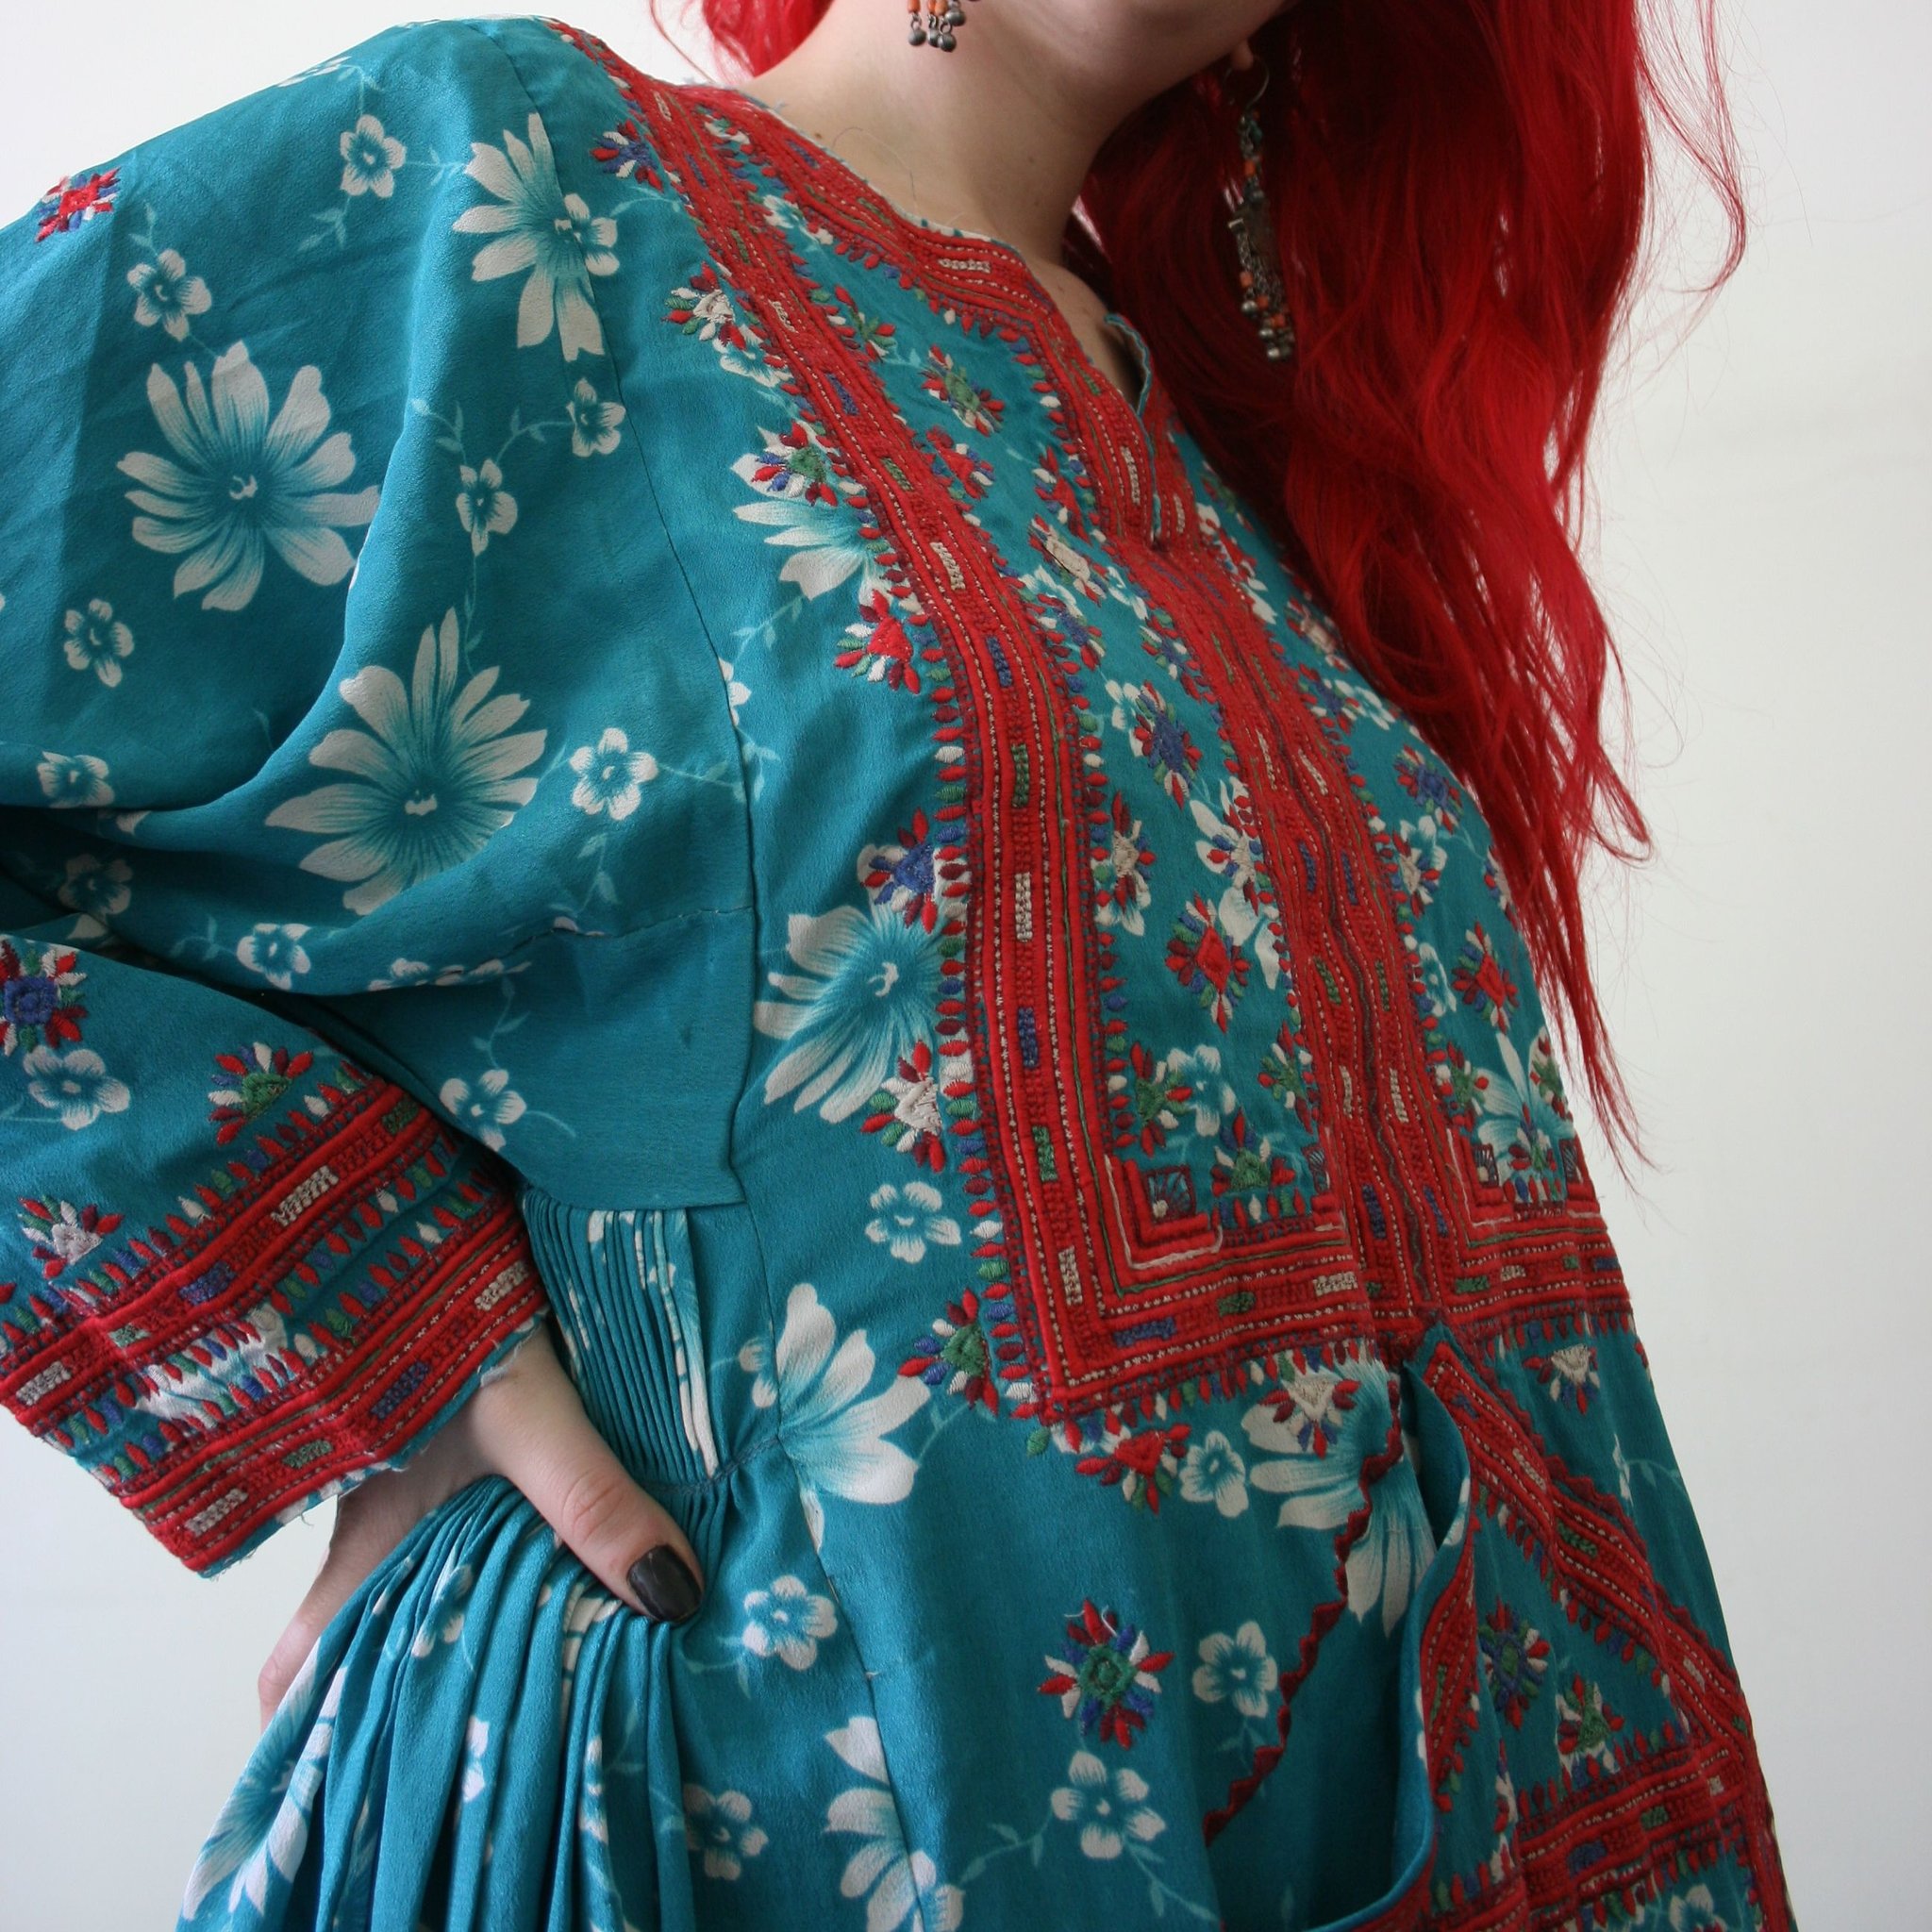 Balochi dress on Pinterest